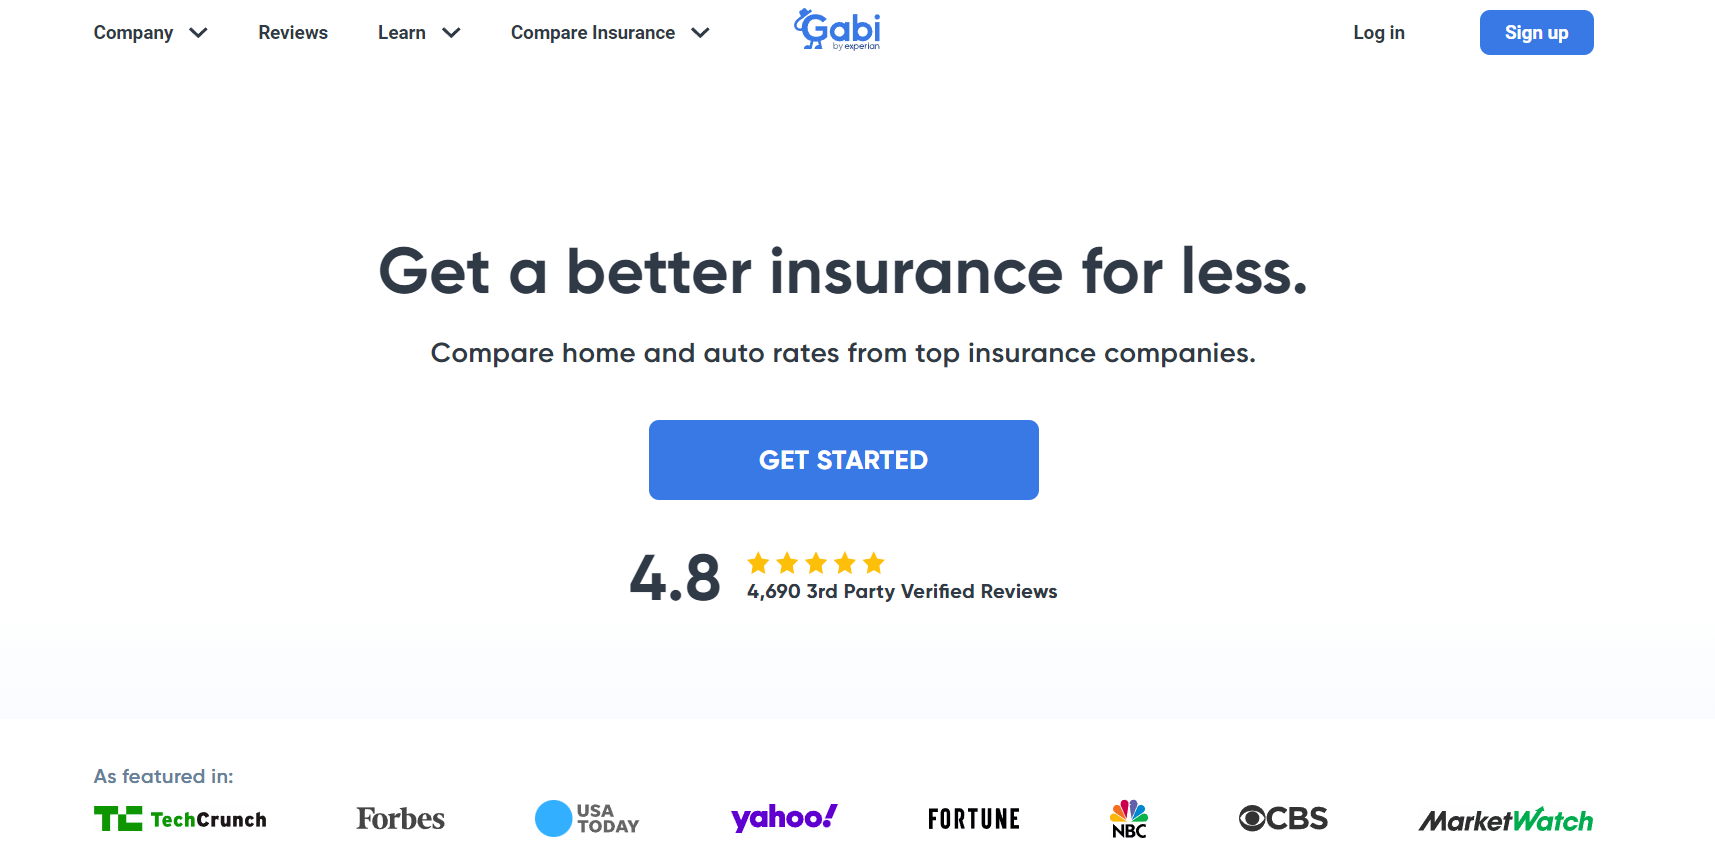 Gabi Insurance